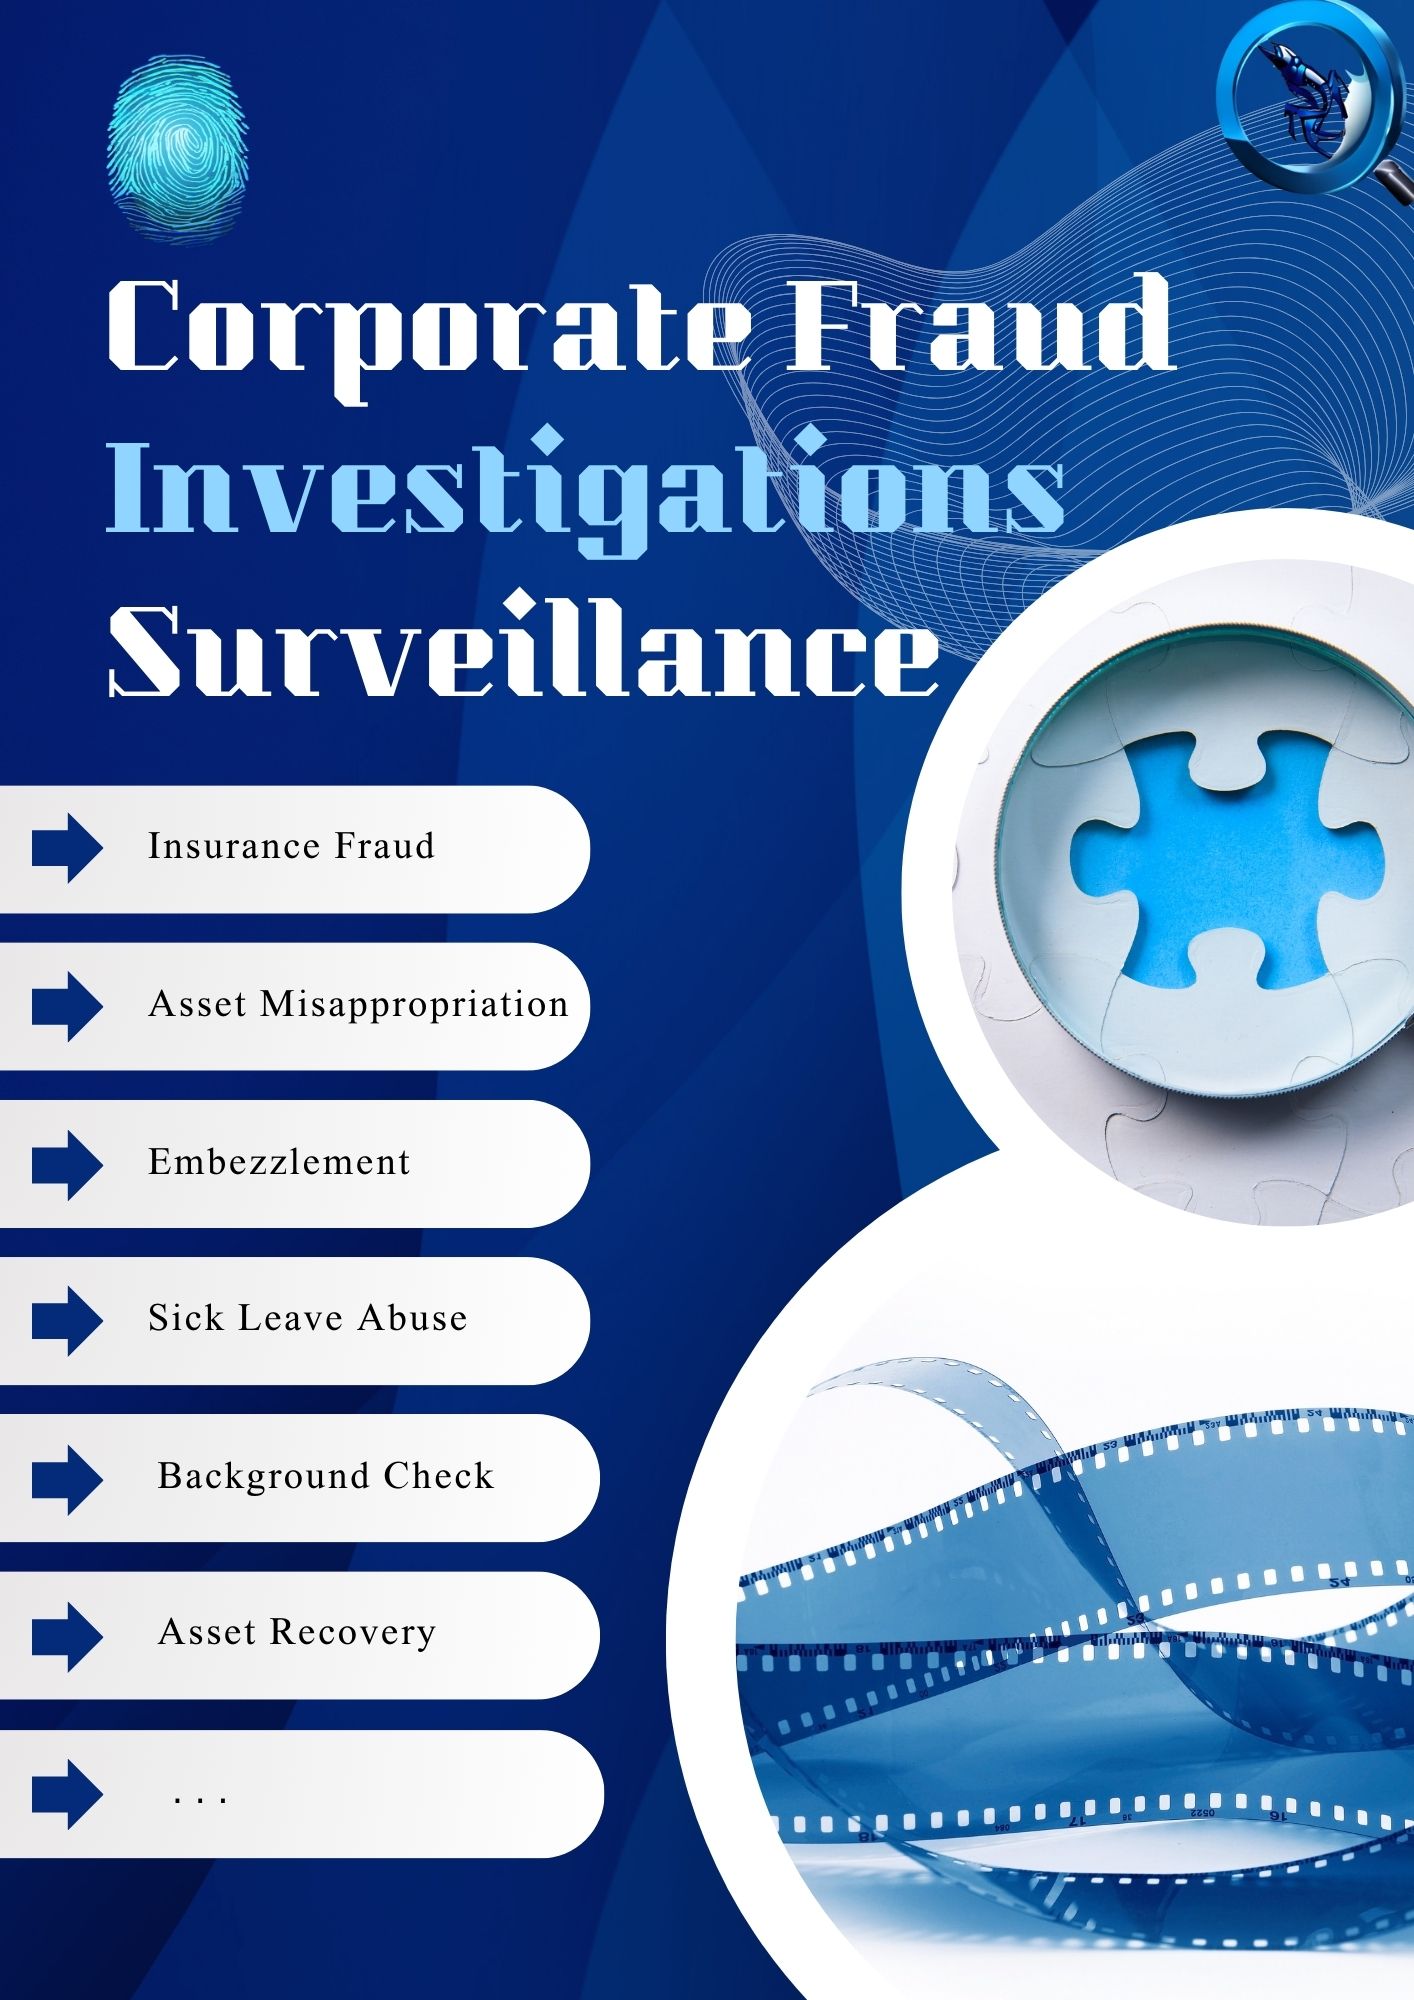 Corporate Fraud Investigations & Surveillance